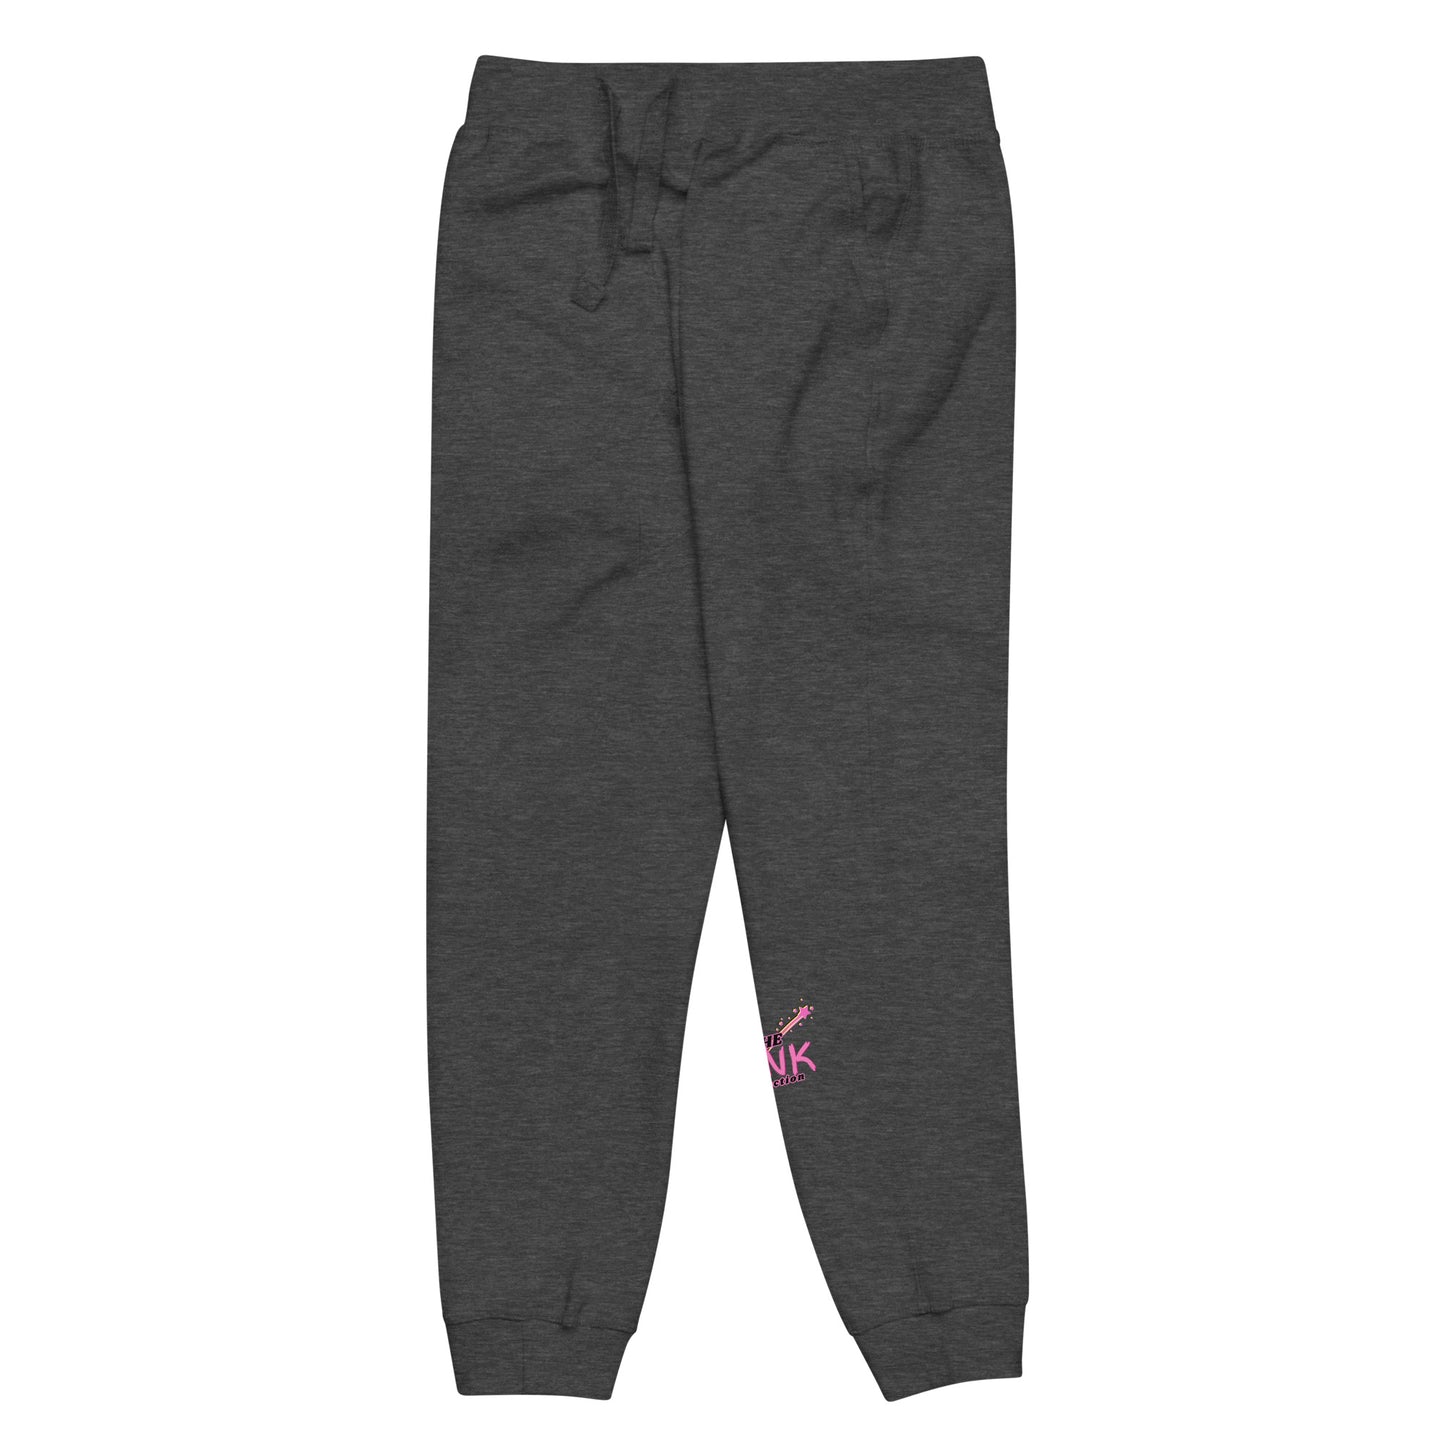 'The Original P.C.' - Pink Star - Unisex fleece sweatpants